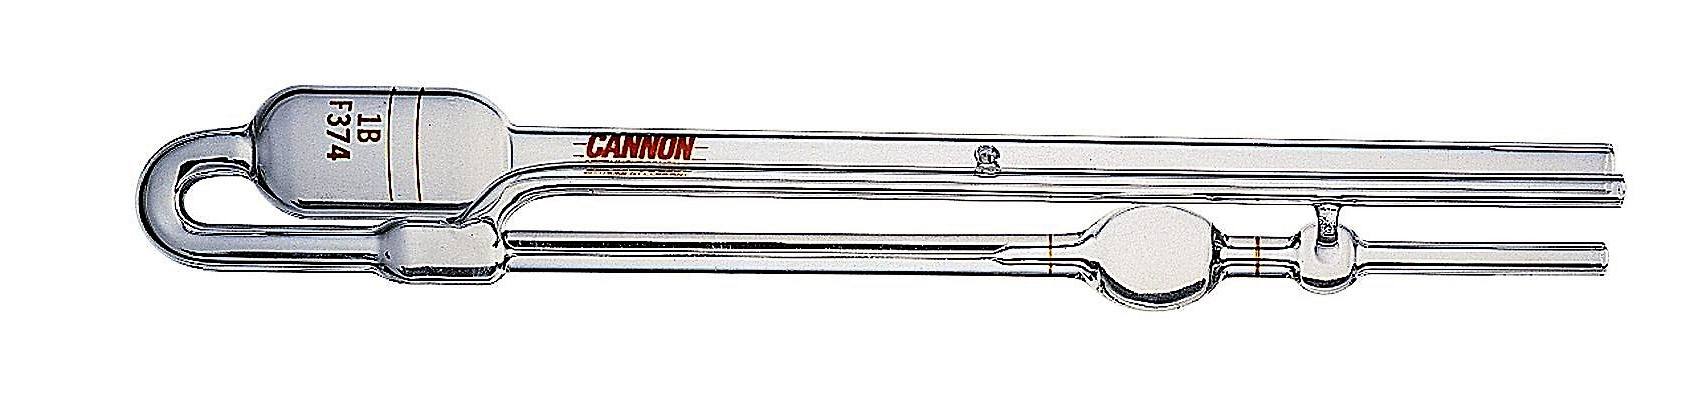 Cannon ASTM 毛细管粘度计 粘度管 9721-A50